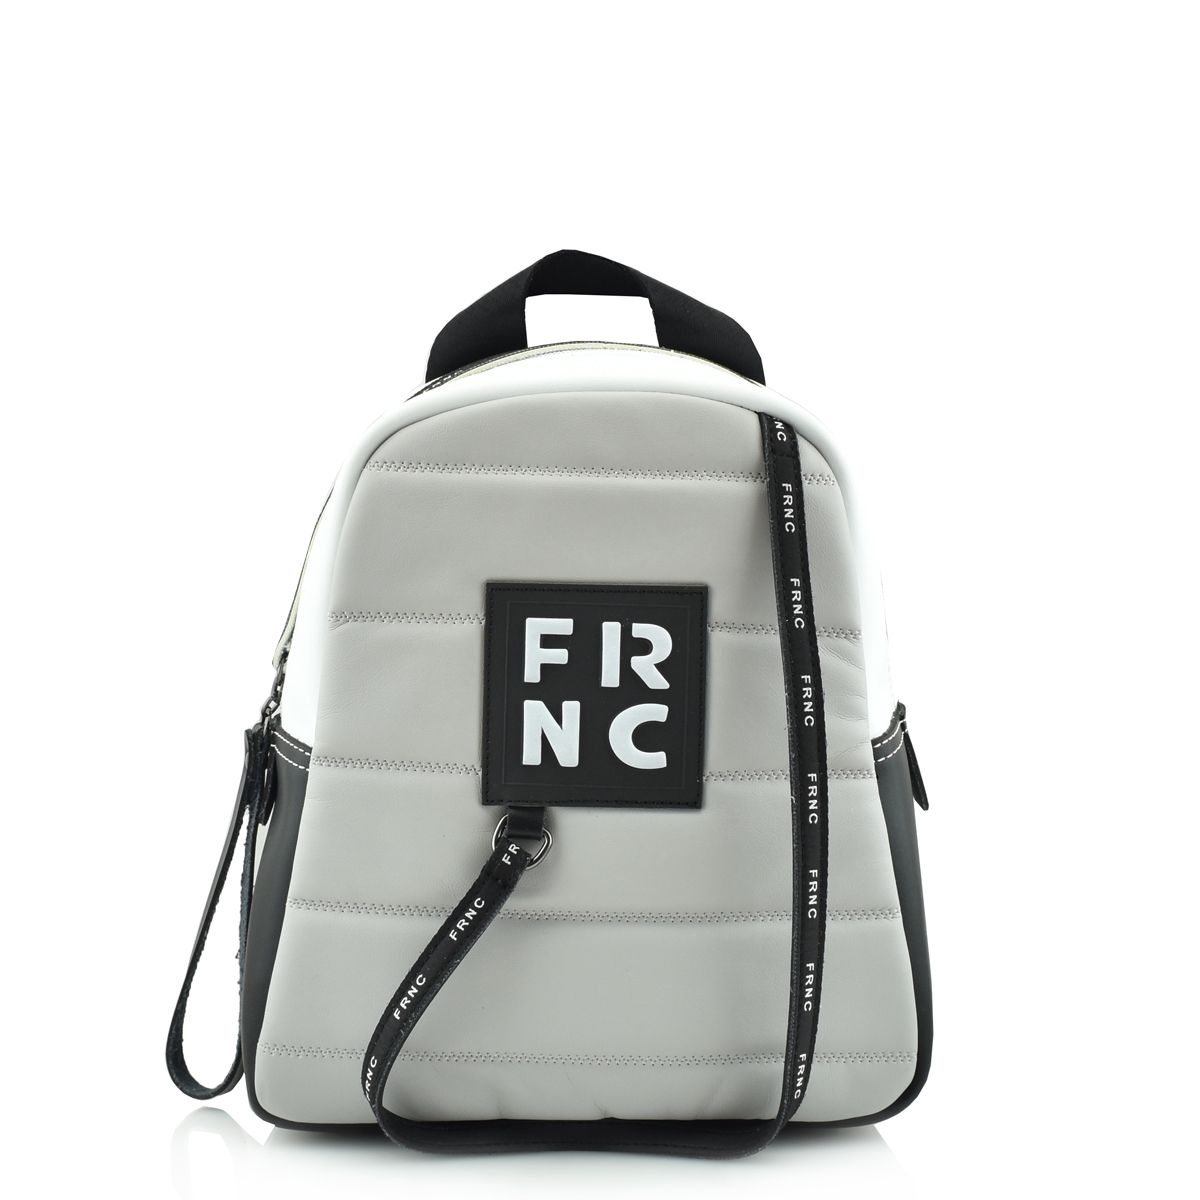 FRNC - FRANCESCO CLASSIC MINI DOUBLE COLOR BACKPACK - 2131 GREY